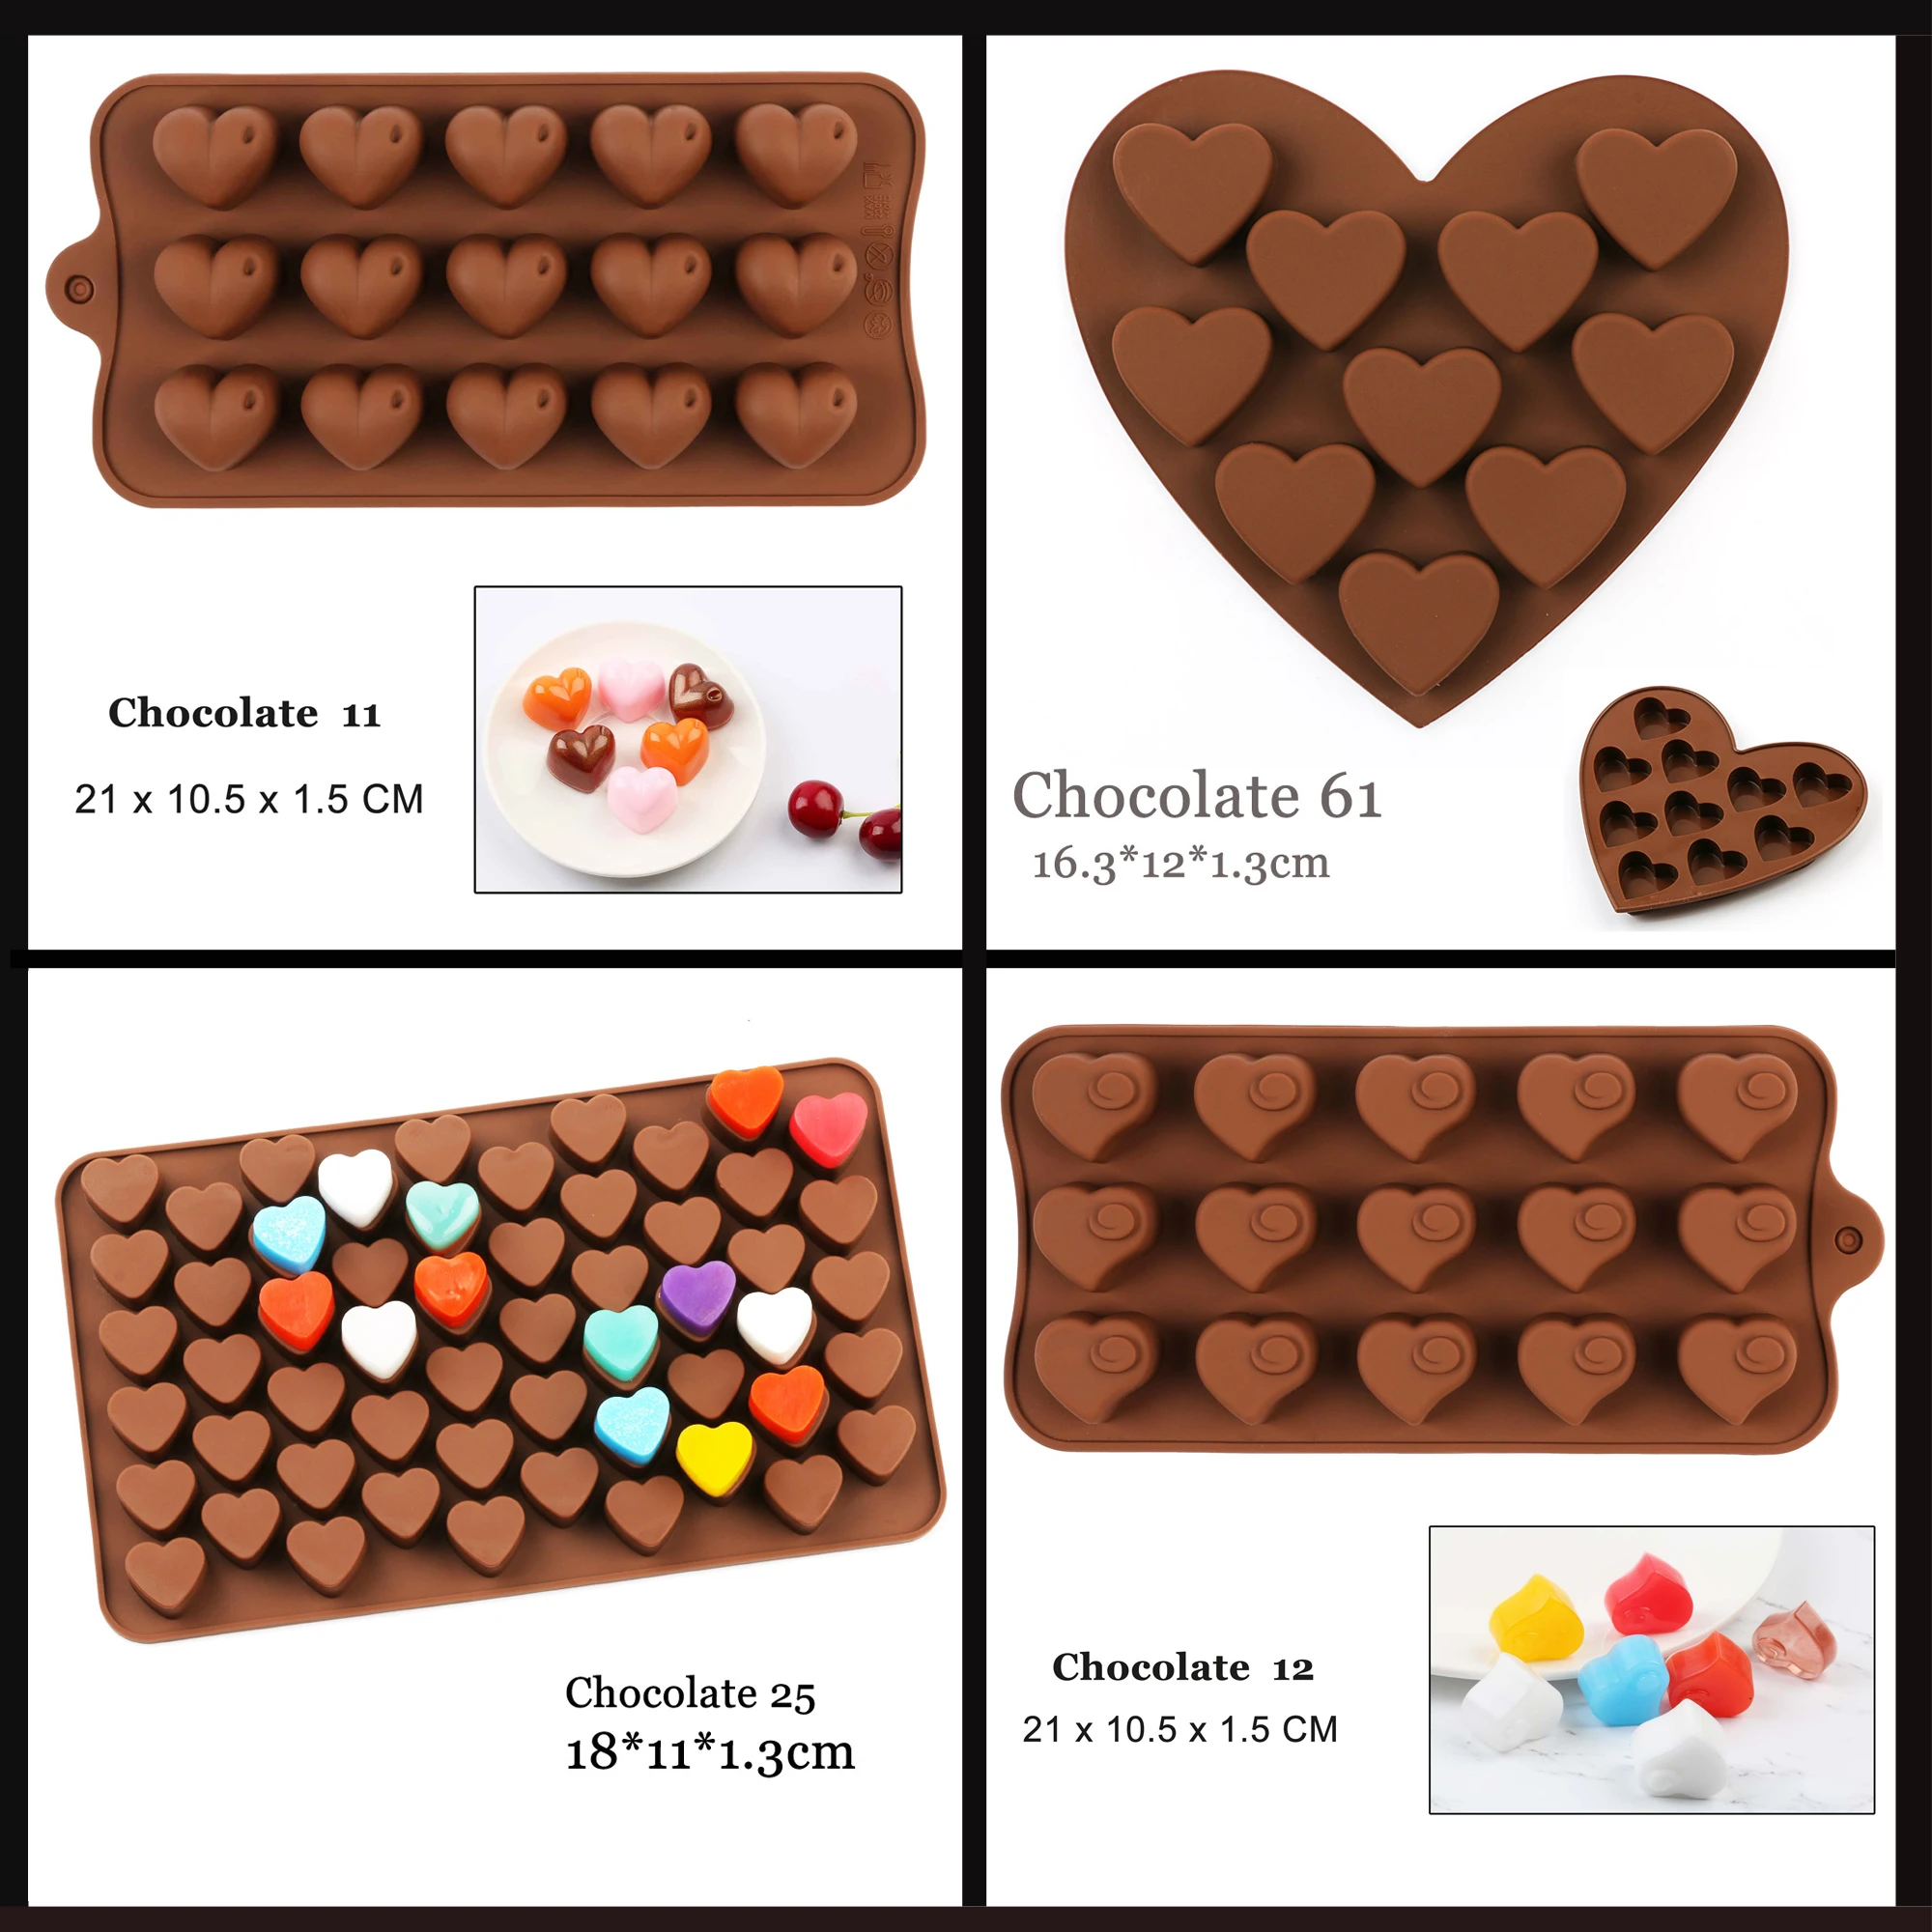 Details about  / Handmade Soap Lollipop Mould Chocolate Moulds Crafts Chocolate Fondant Mold MP